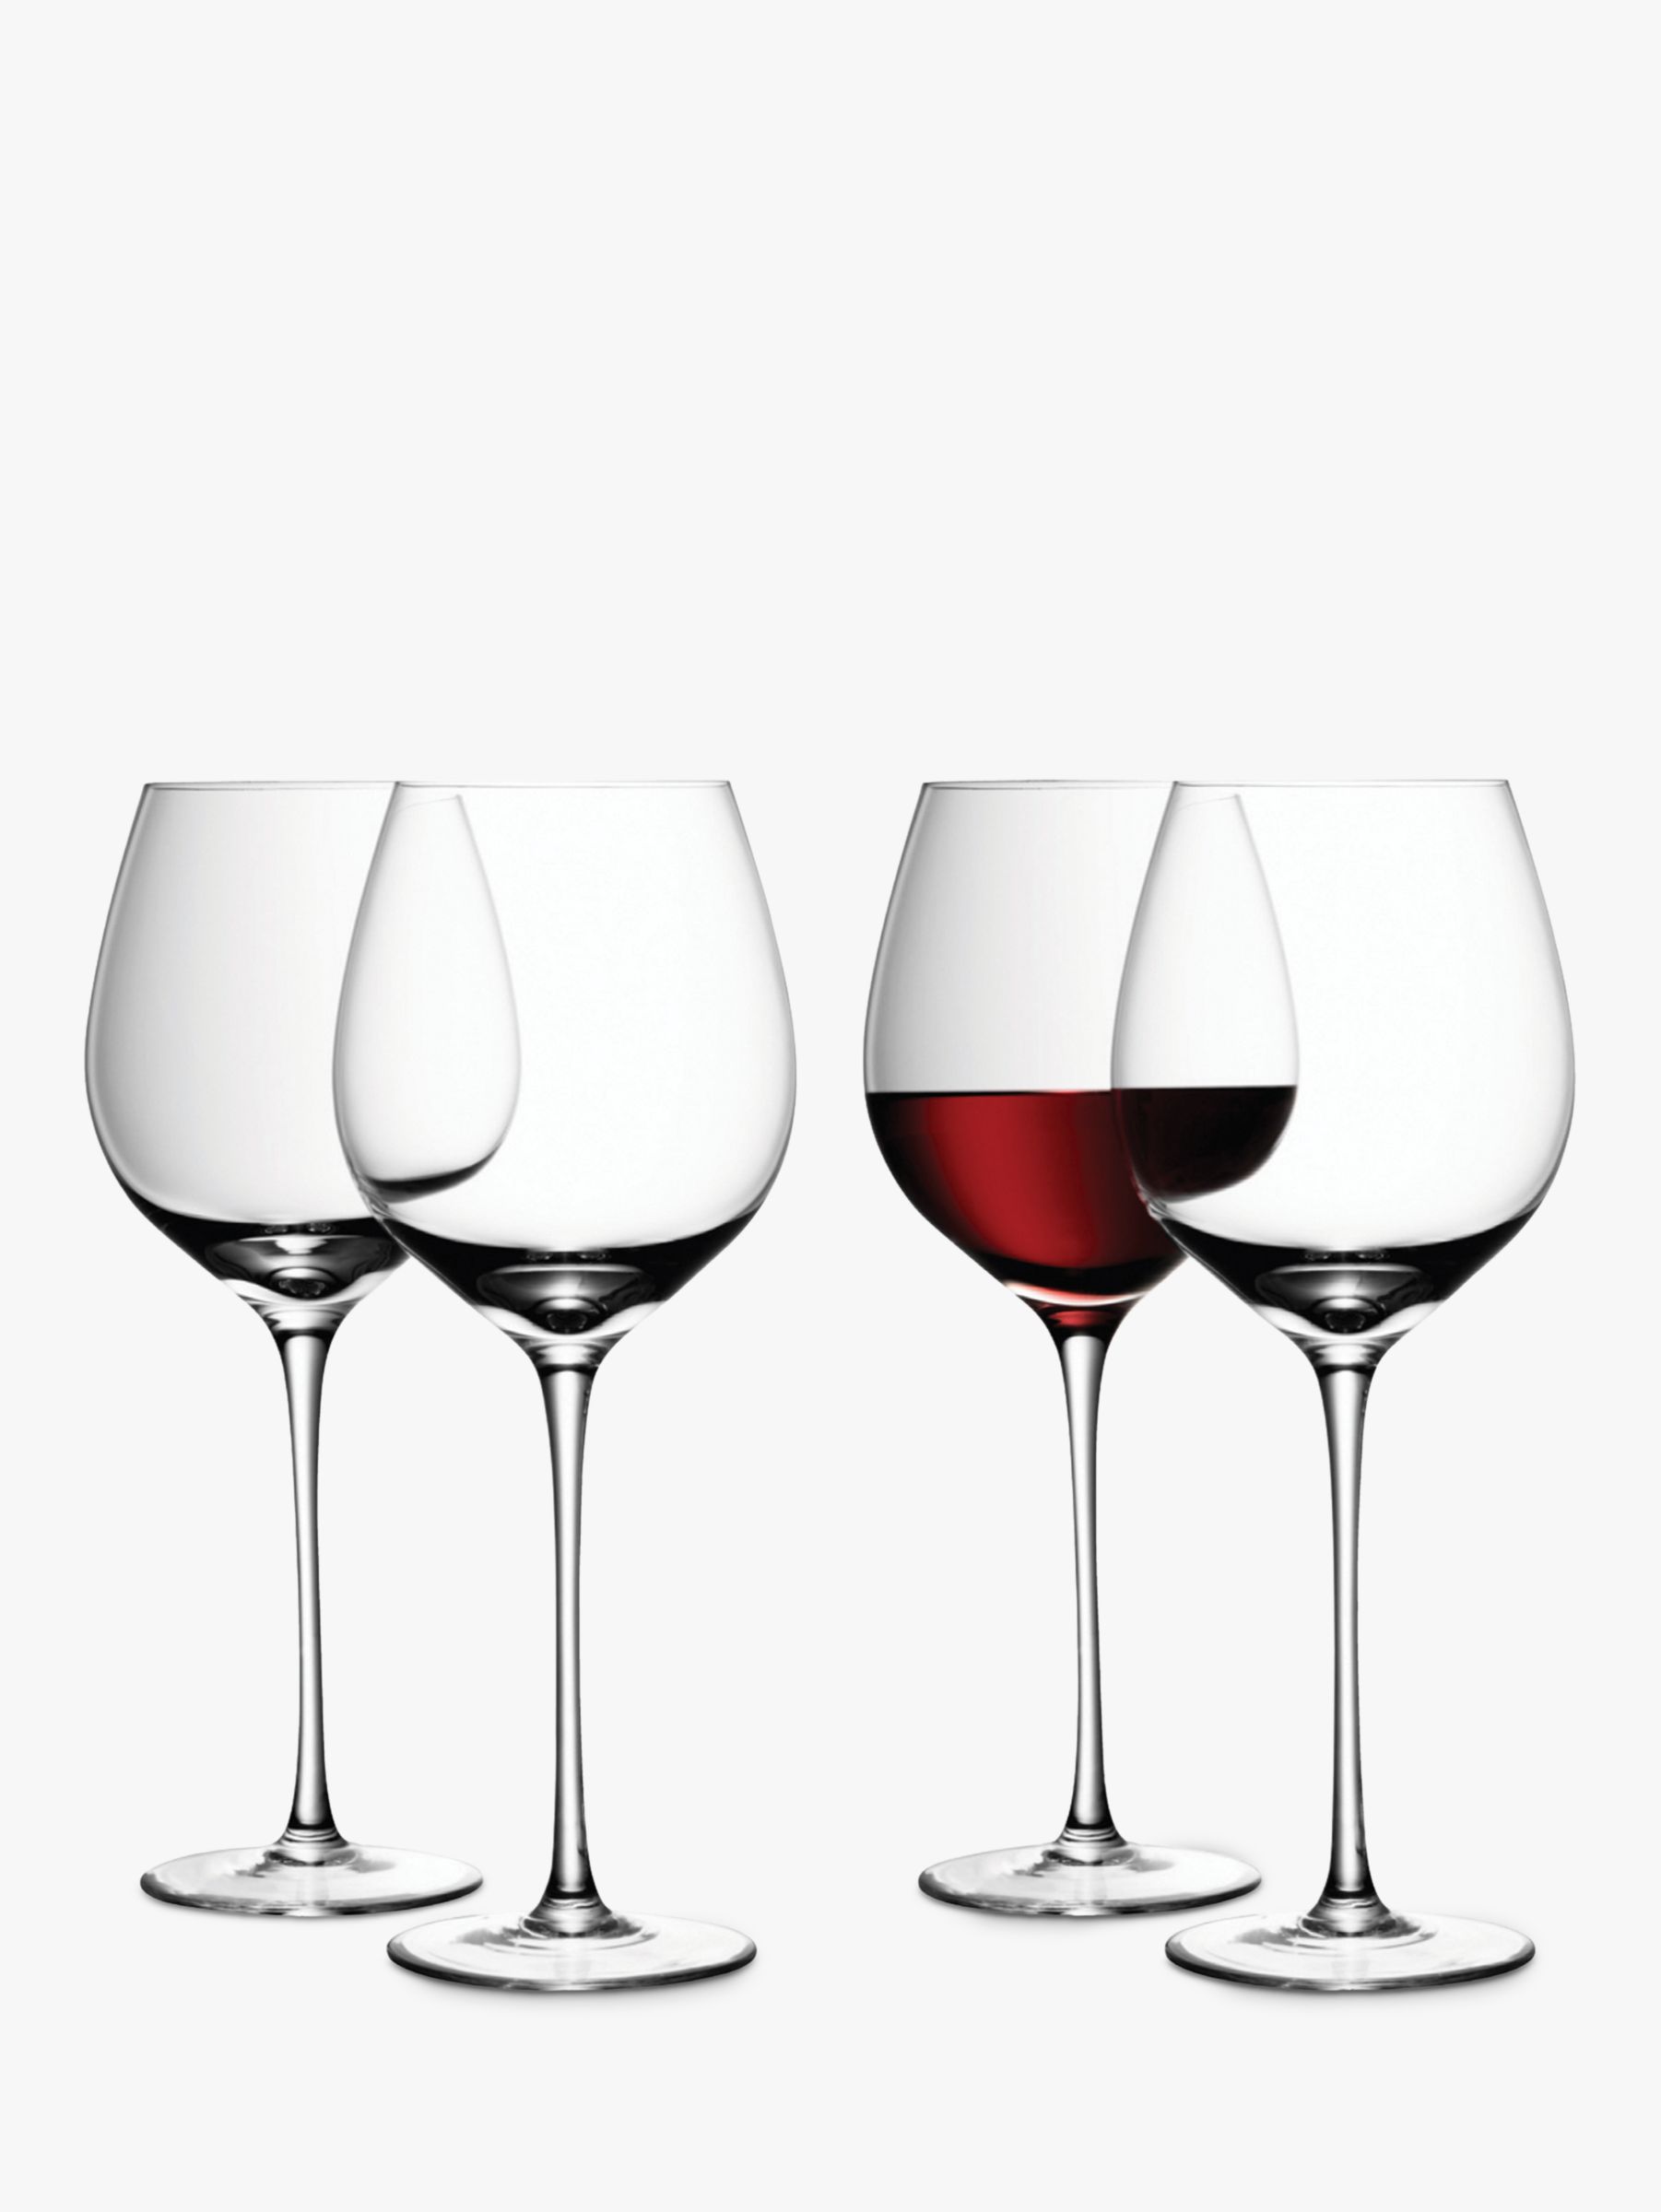 Формы бокалов для вина. Бокалы LSA Wine. LSA International бокалы для вина. Бокалы для вина 850 мл. Набор бокалов для вина LSA International Moya 395 мл.